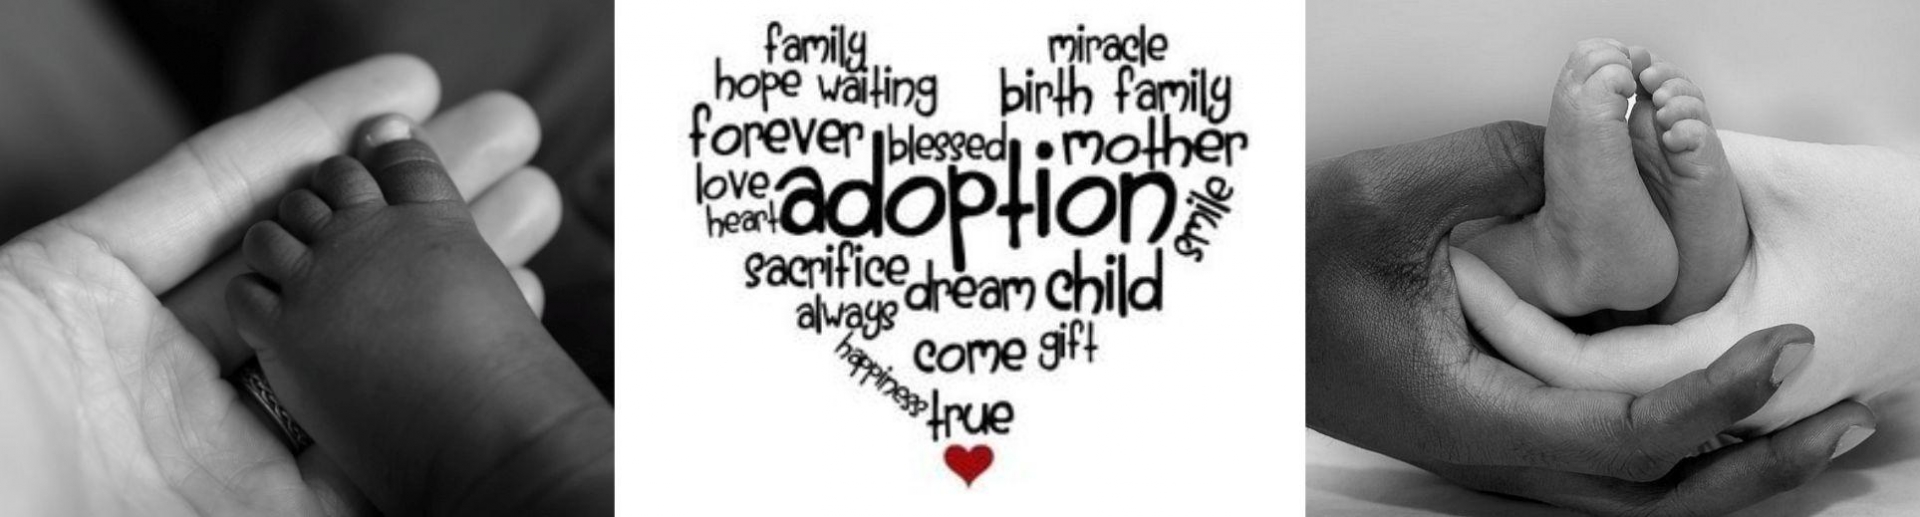 adoption_banner